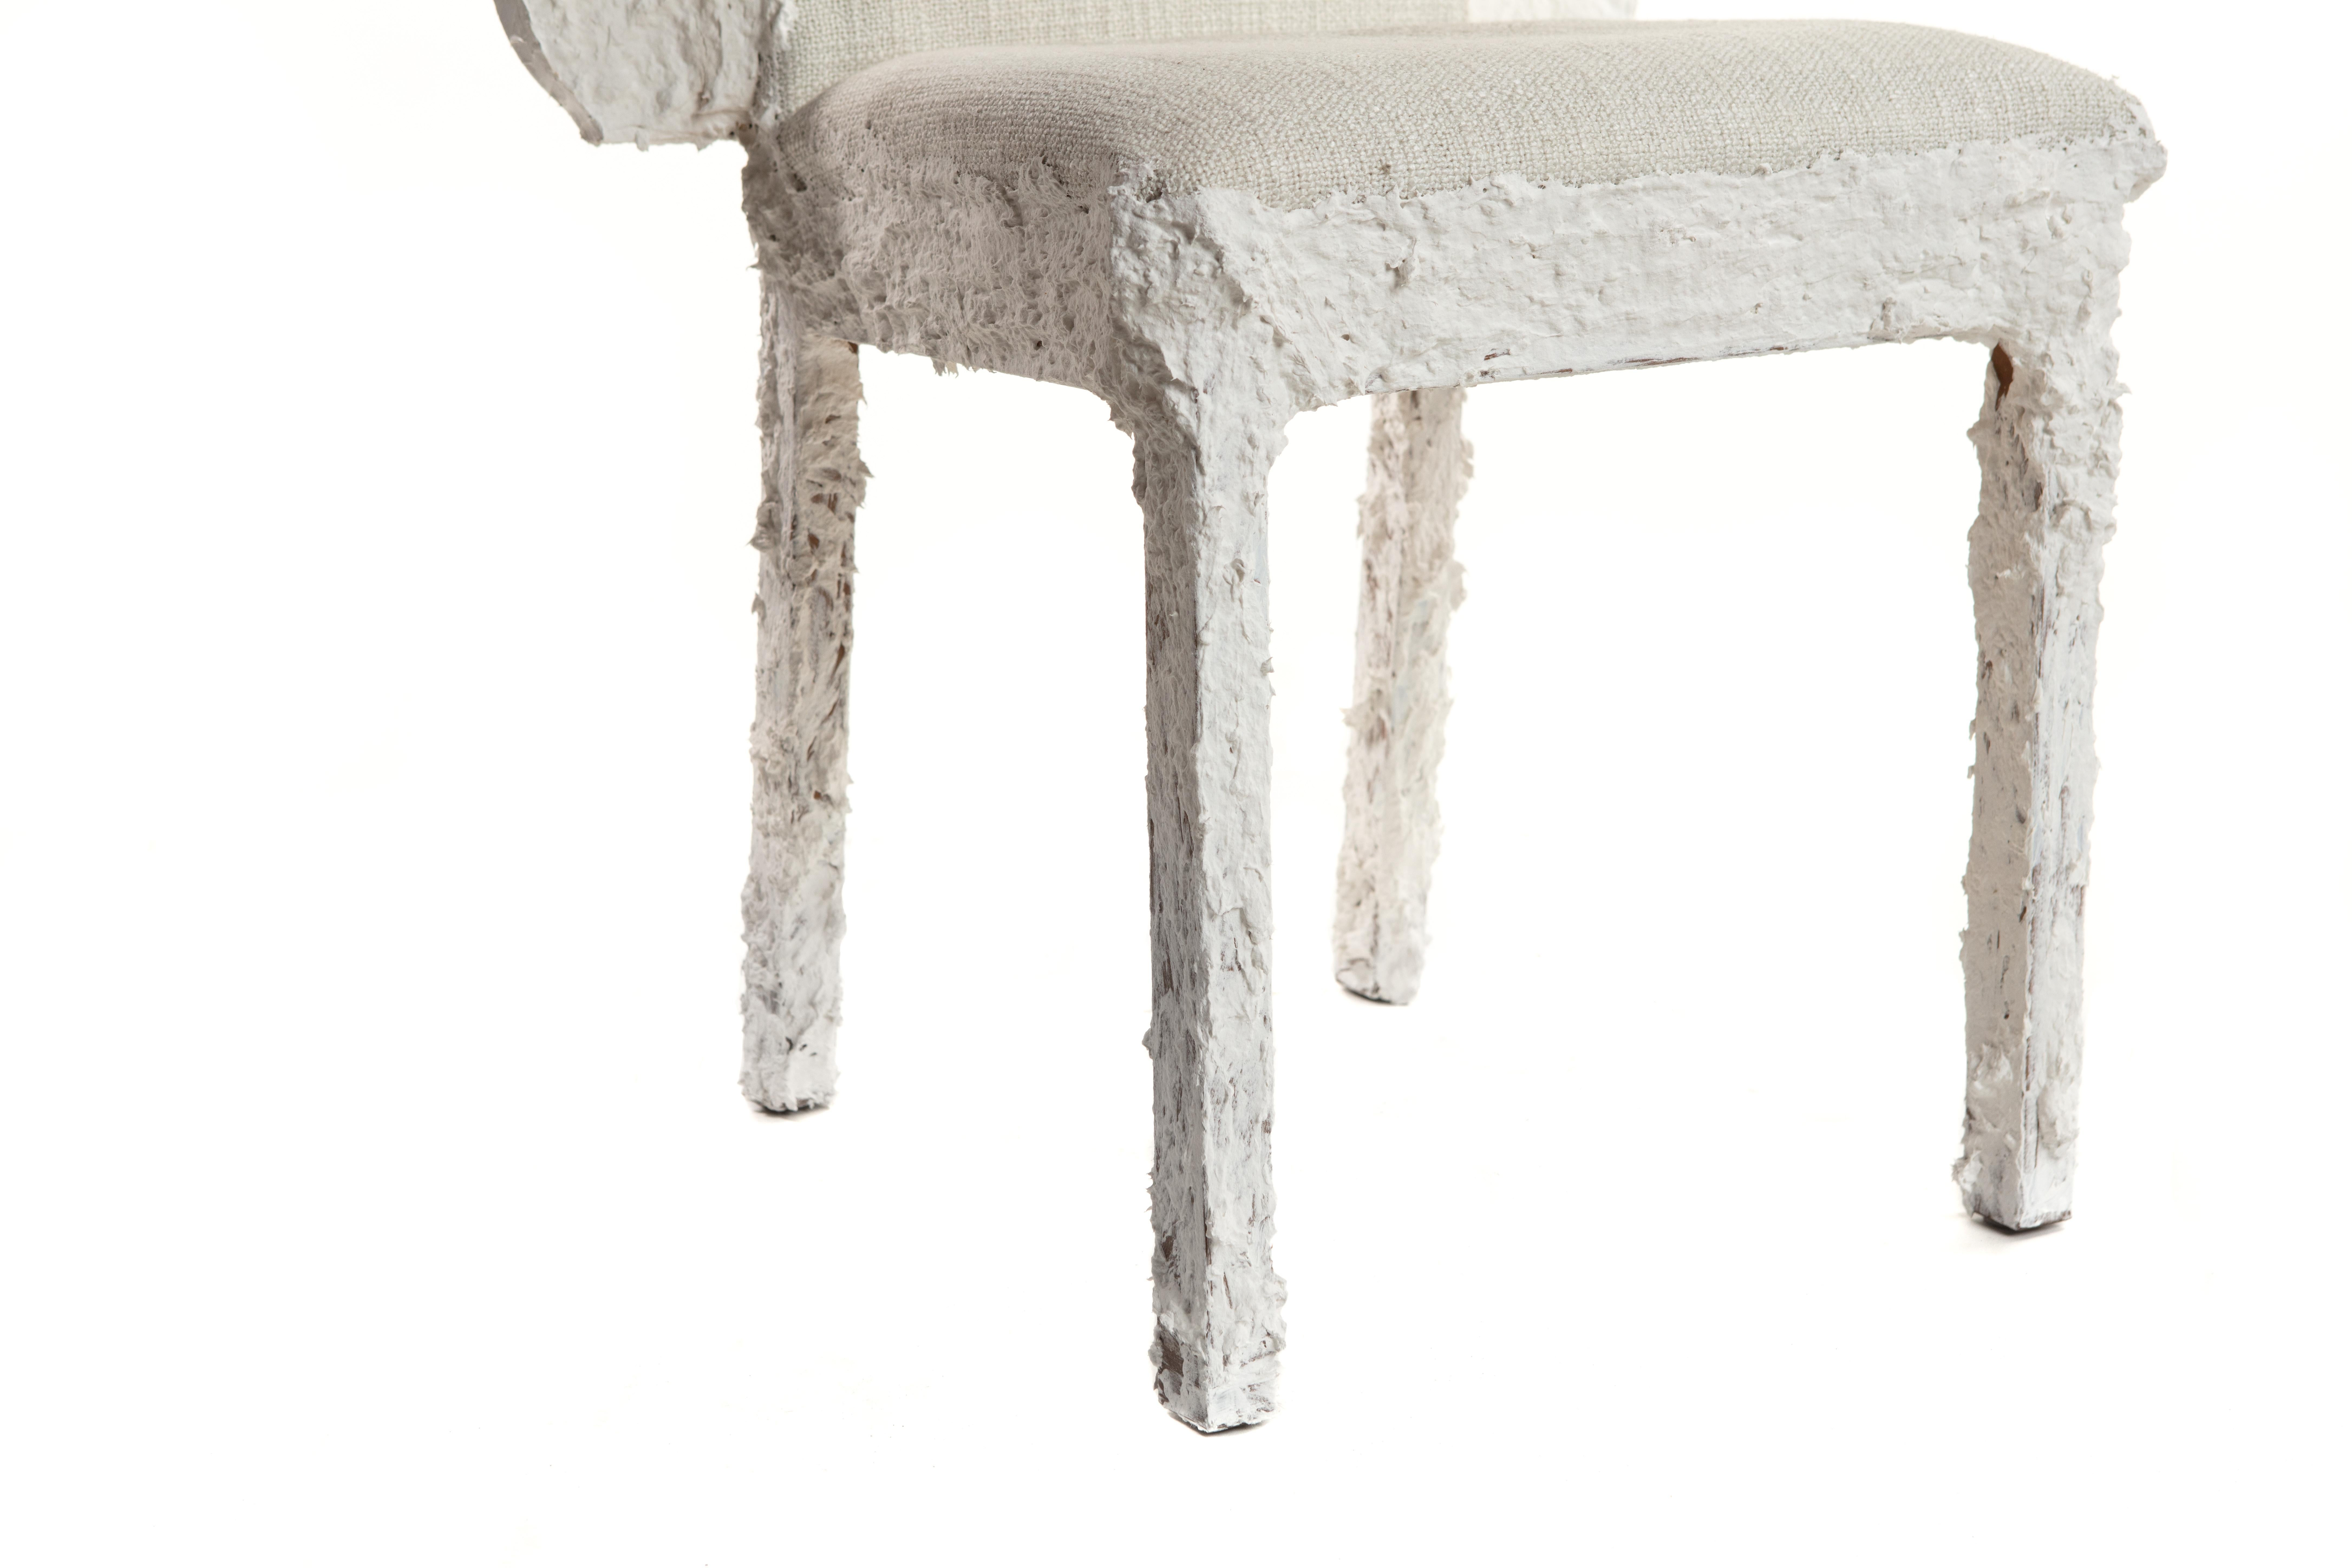 Contemporary White Plaster Sculptural Chair, 21st Century by Mattia Biagi For Sale